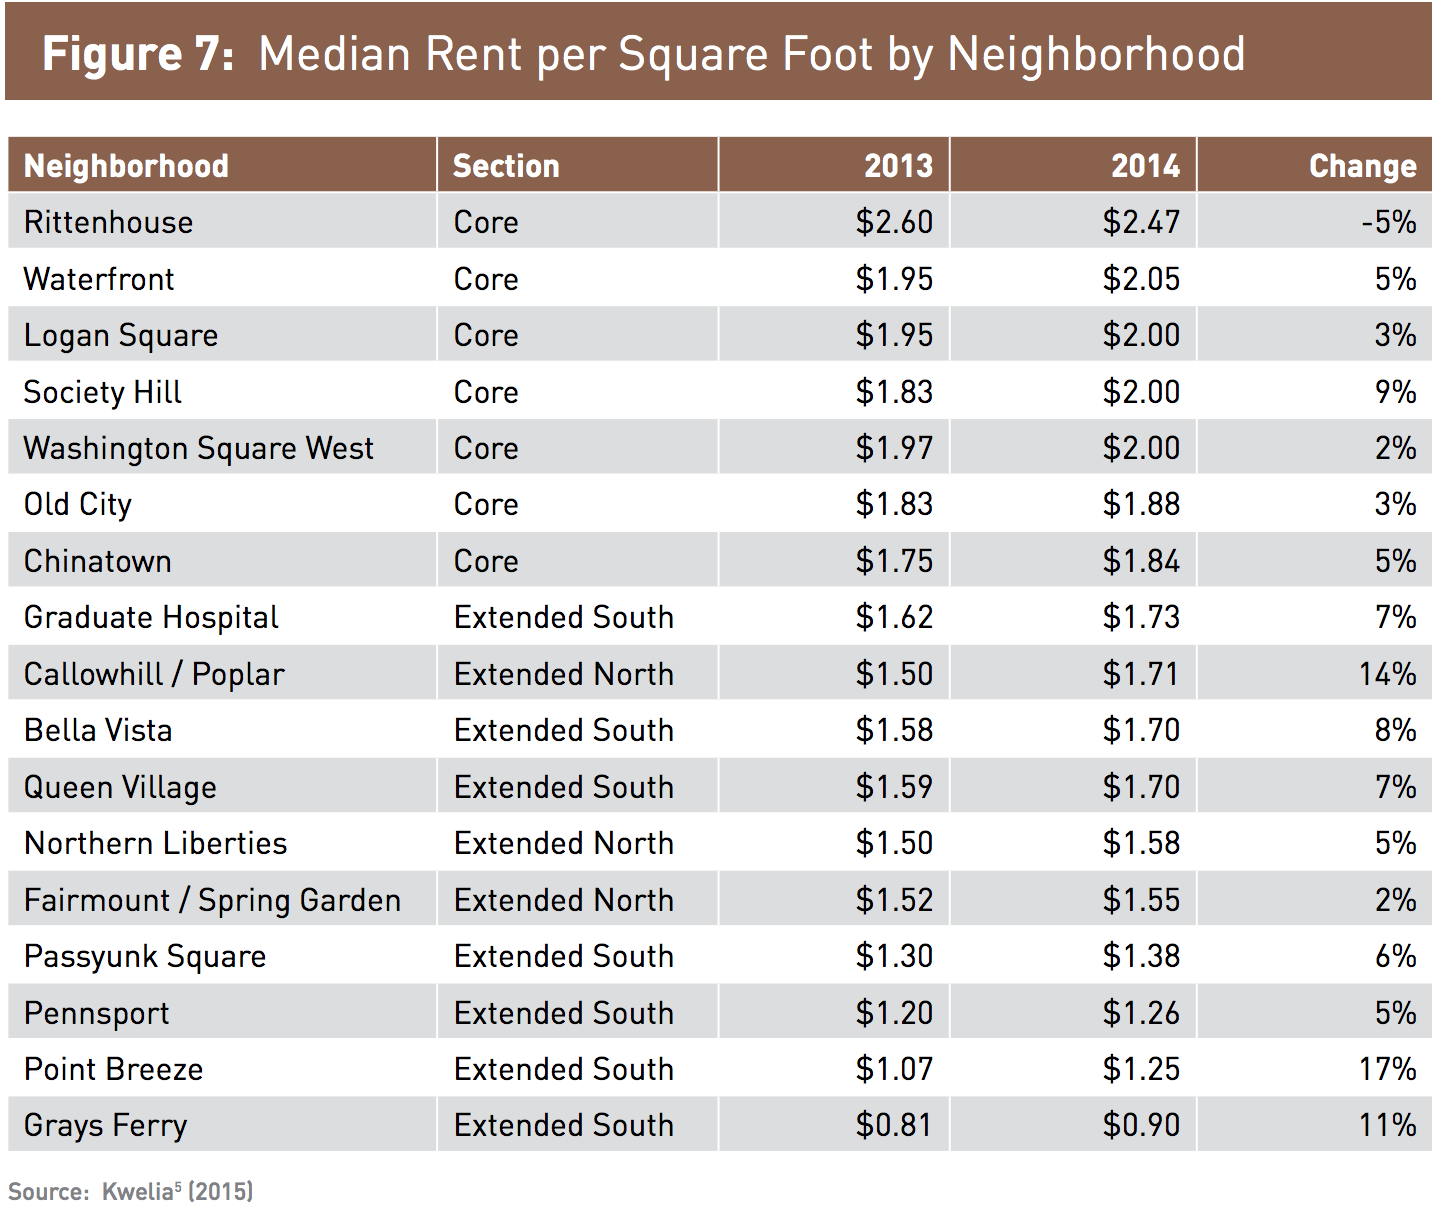 Median Rent per Square Foot by Neighborhood